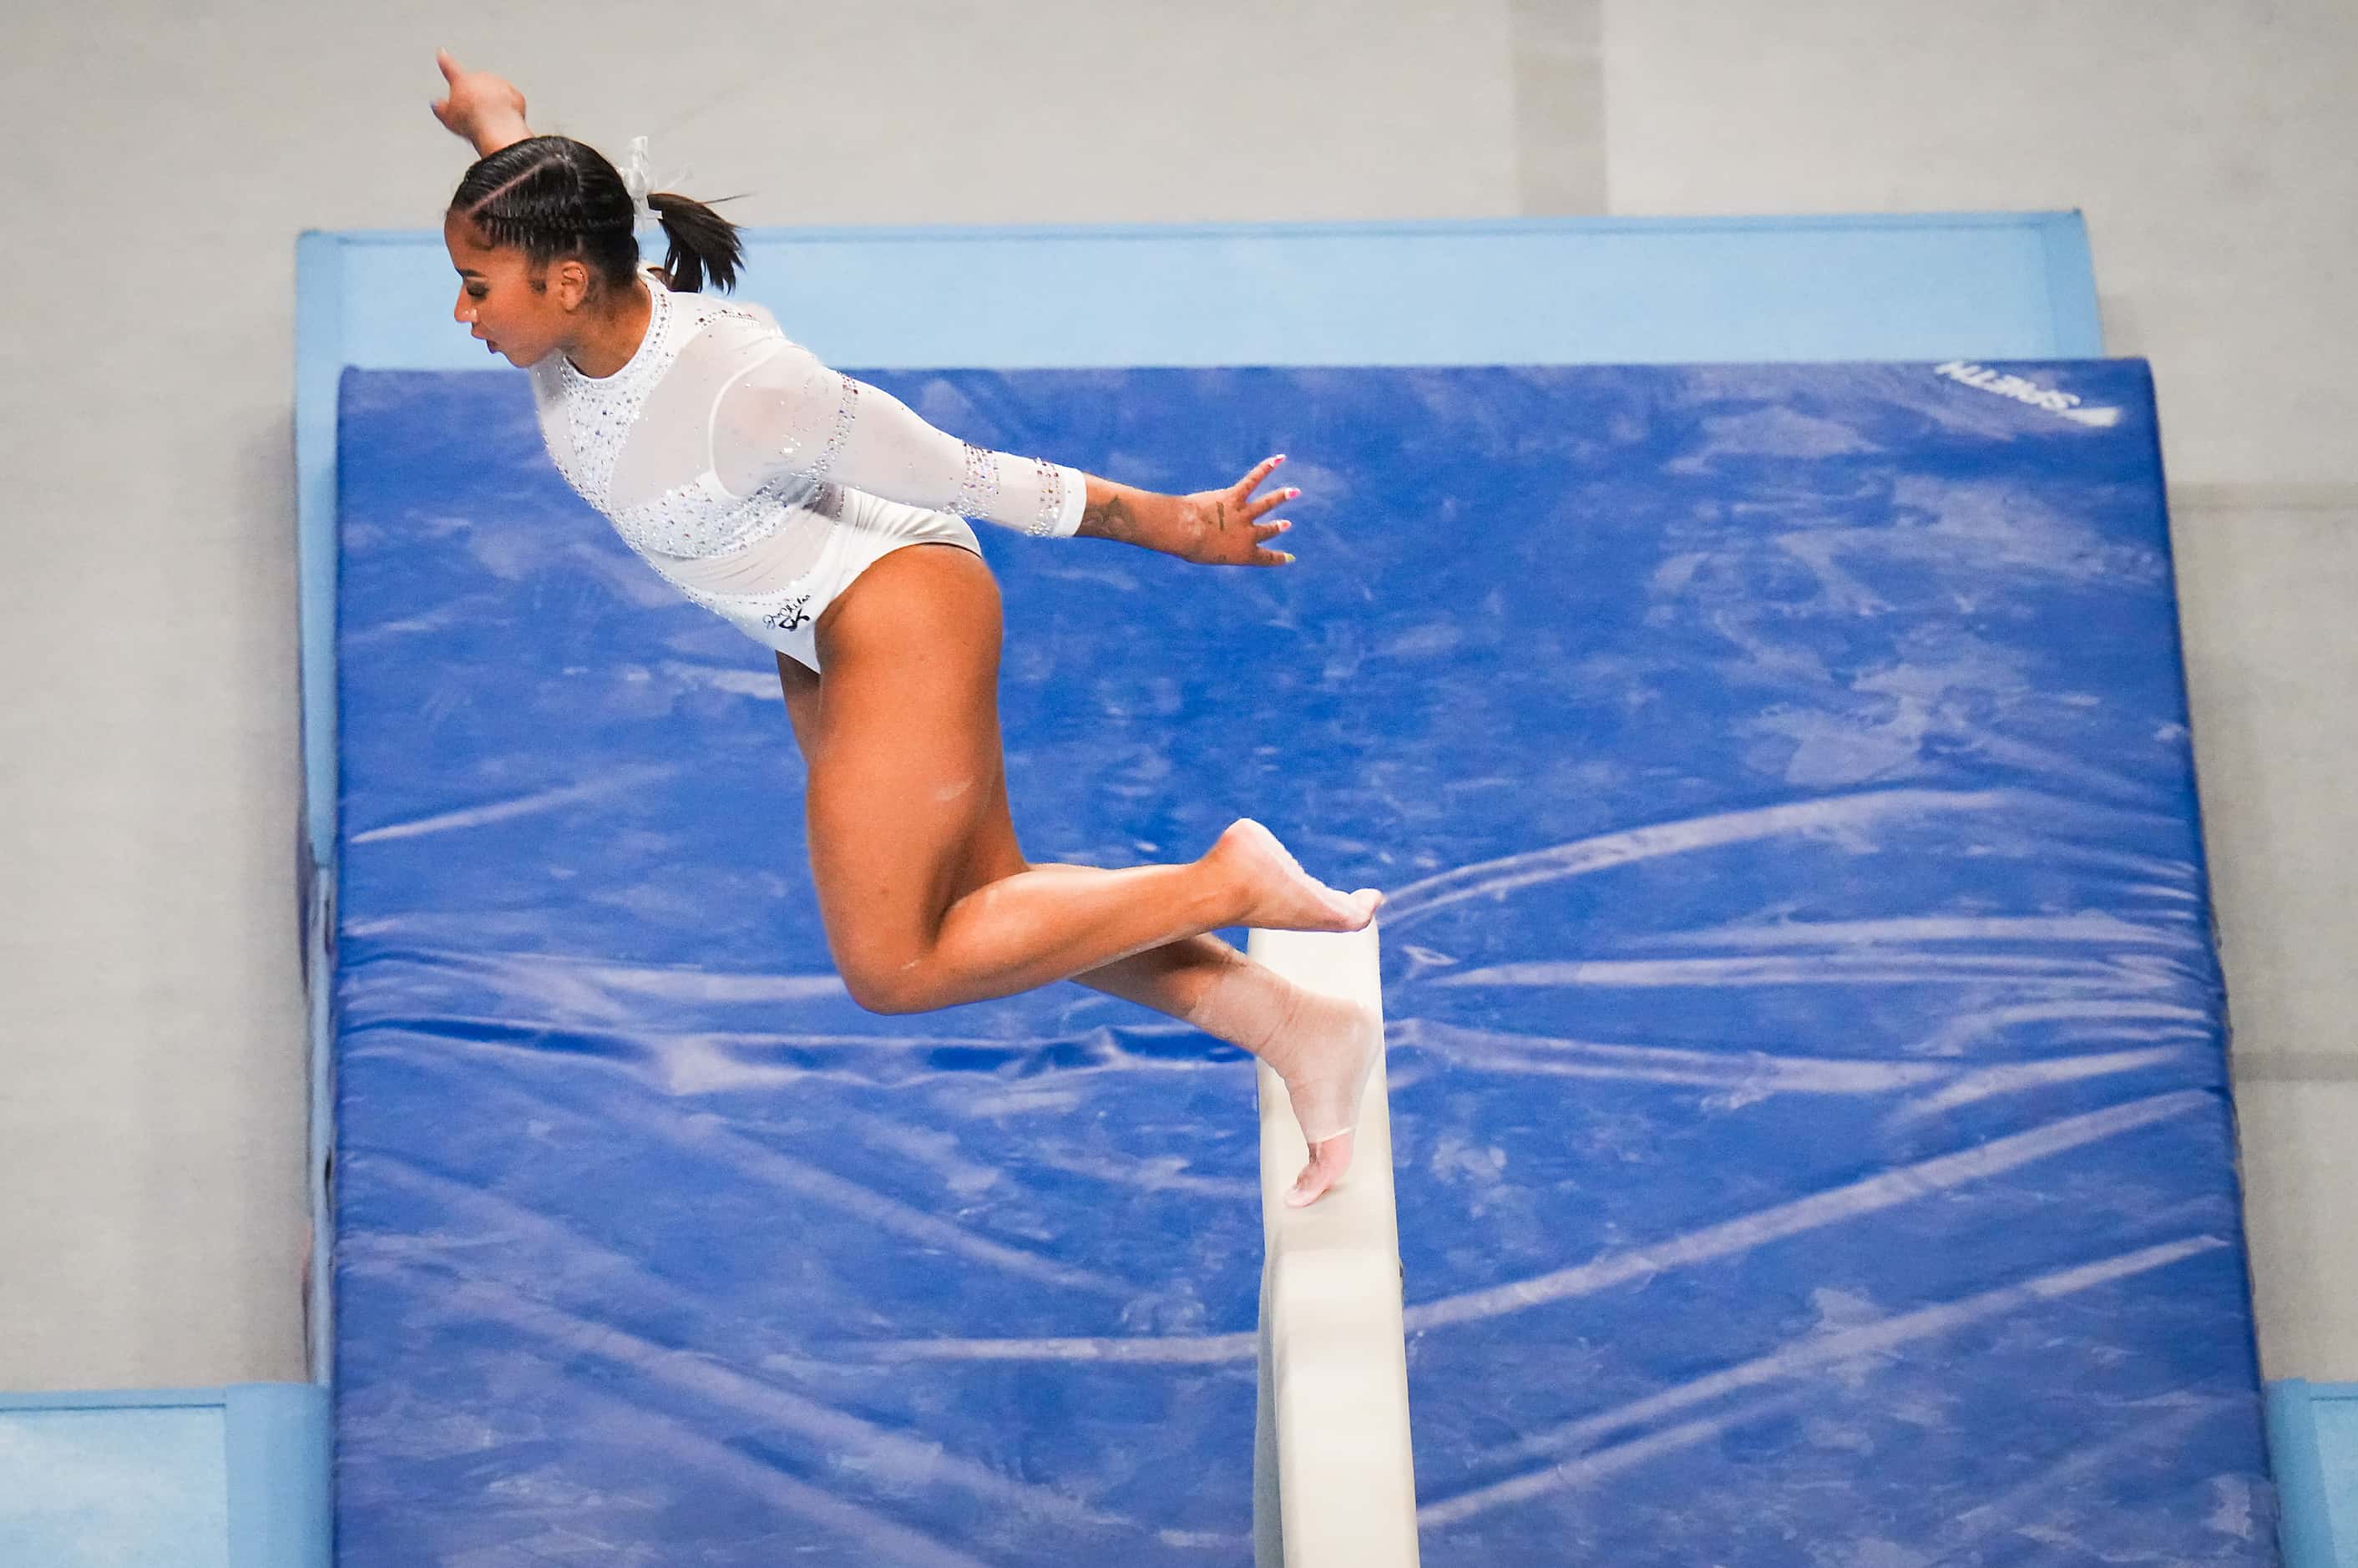 Jordan Chiles slips off the balance beam during the U.S. Gymnastics Championships on Sunday,...